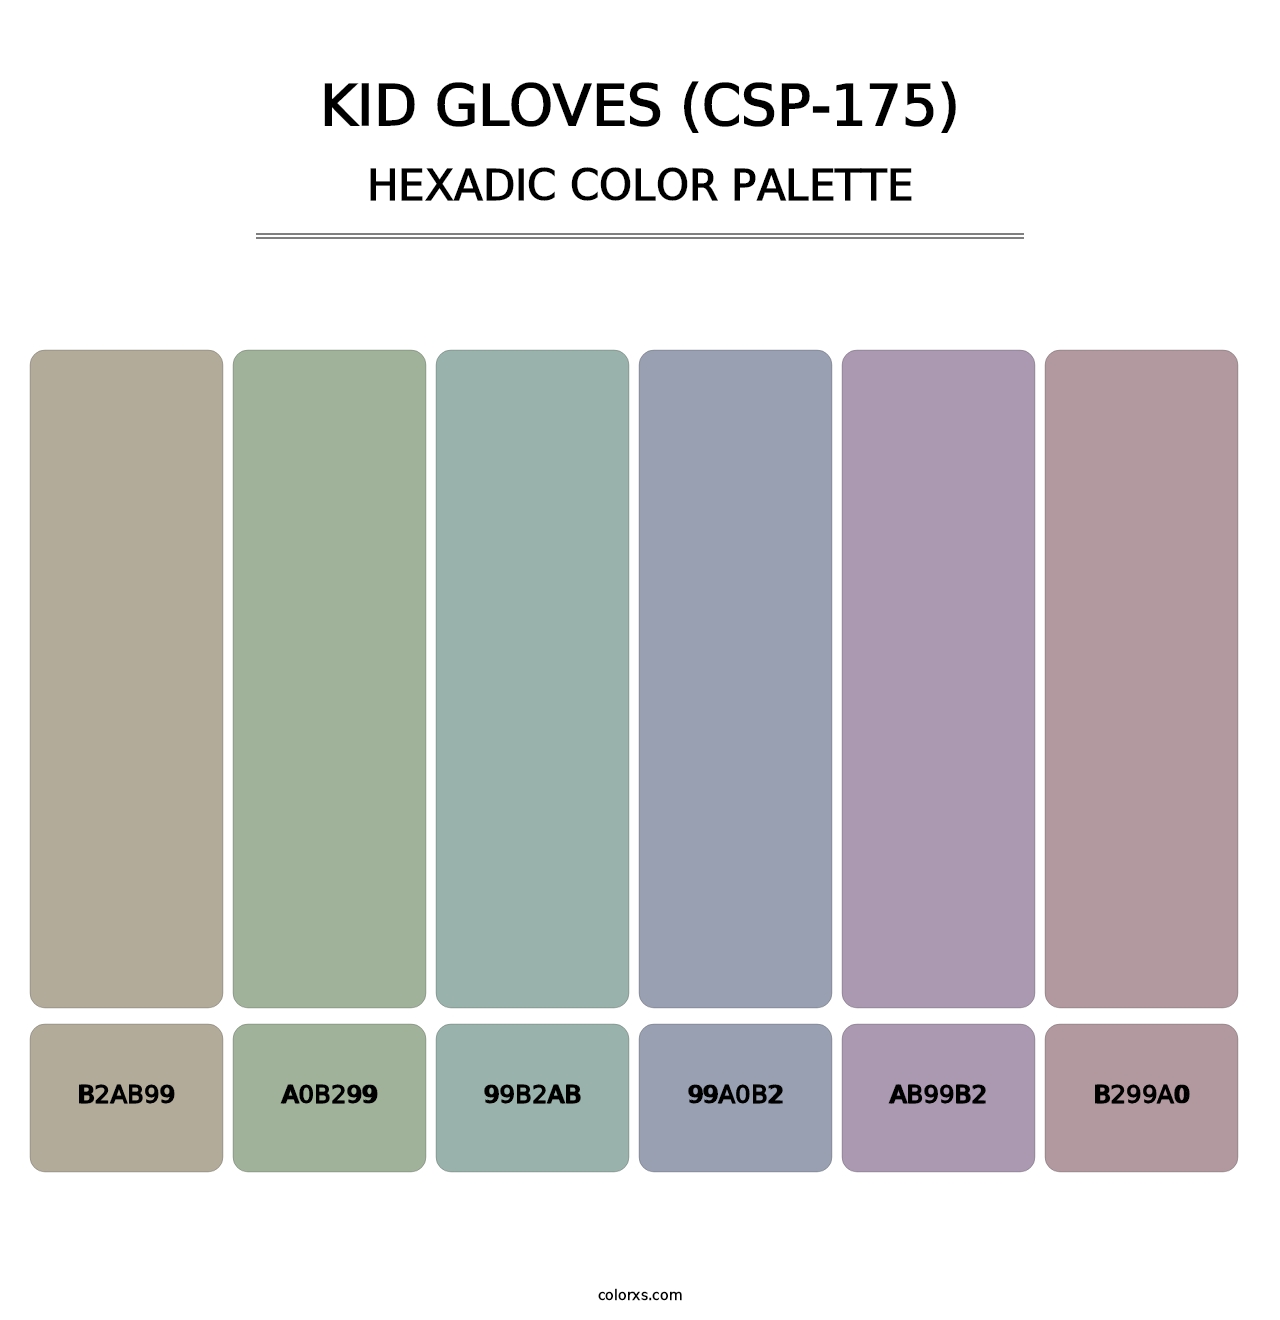 Kid Gloves (CSP-175) - Hexadic Color Palette